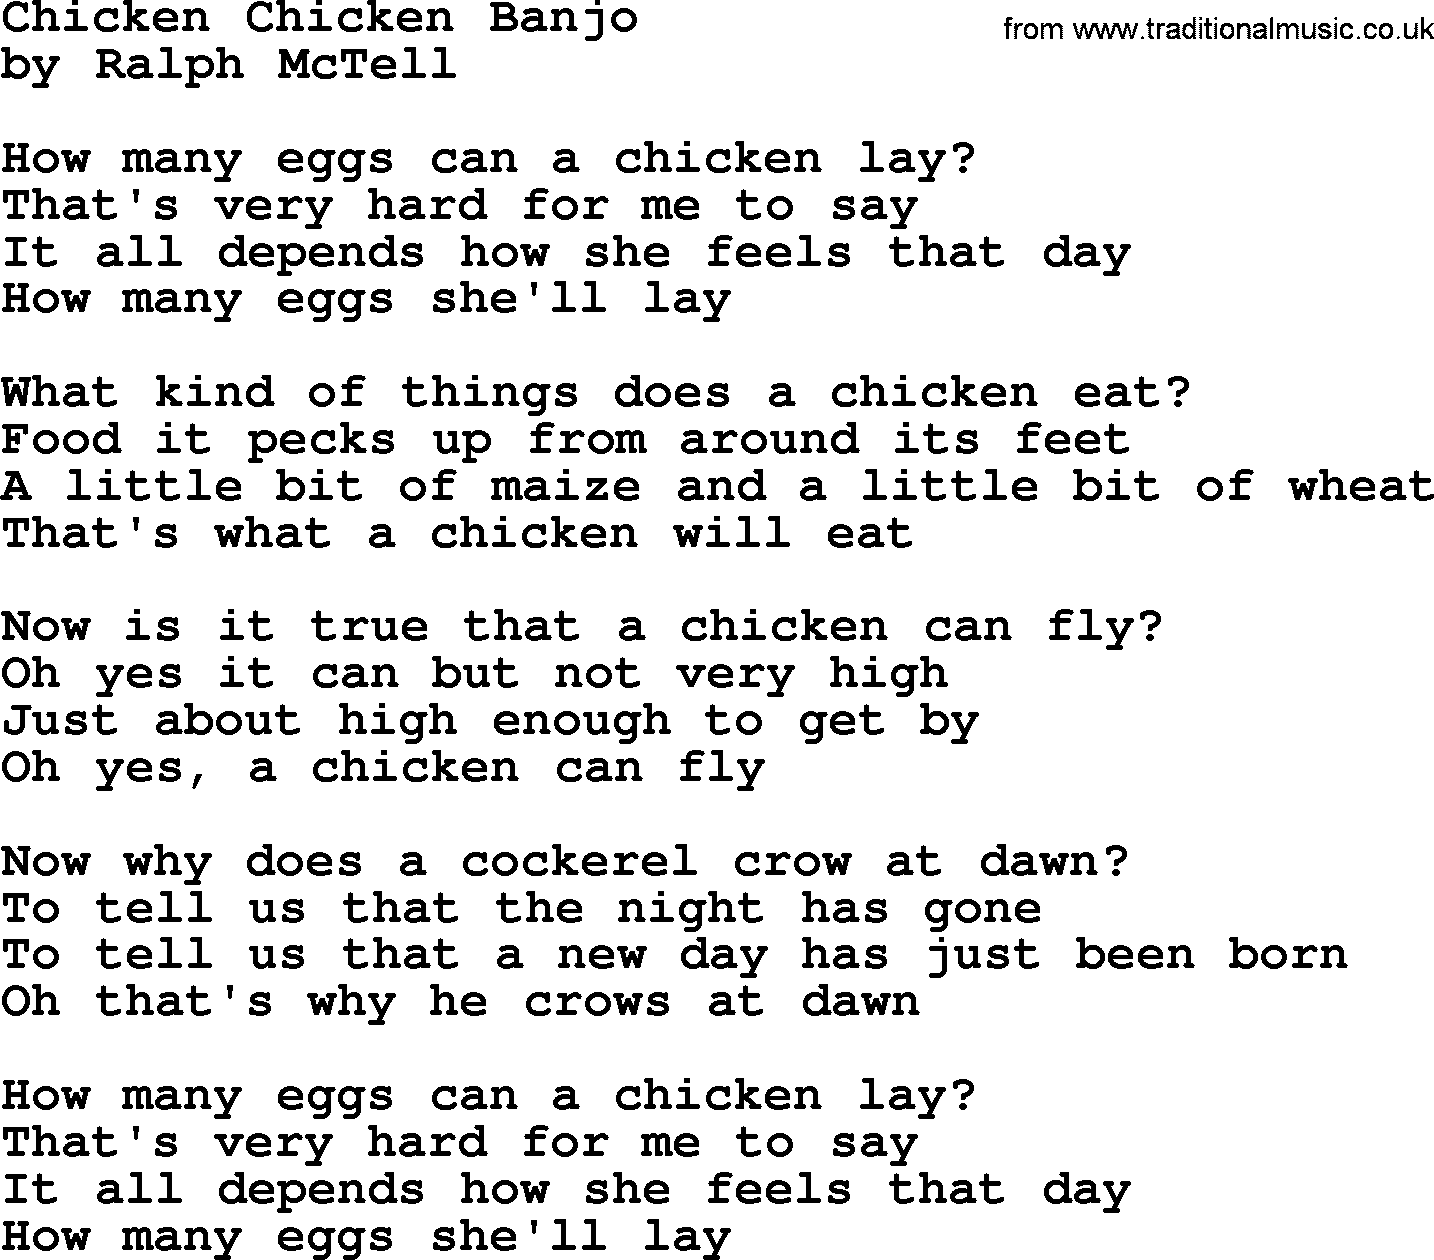 Ralph McTell Song: Chicken Chicken Banjo, lyrics